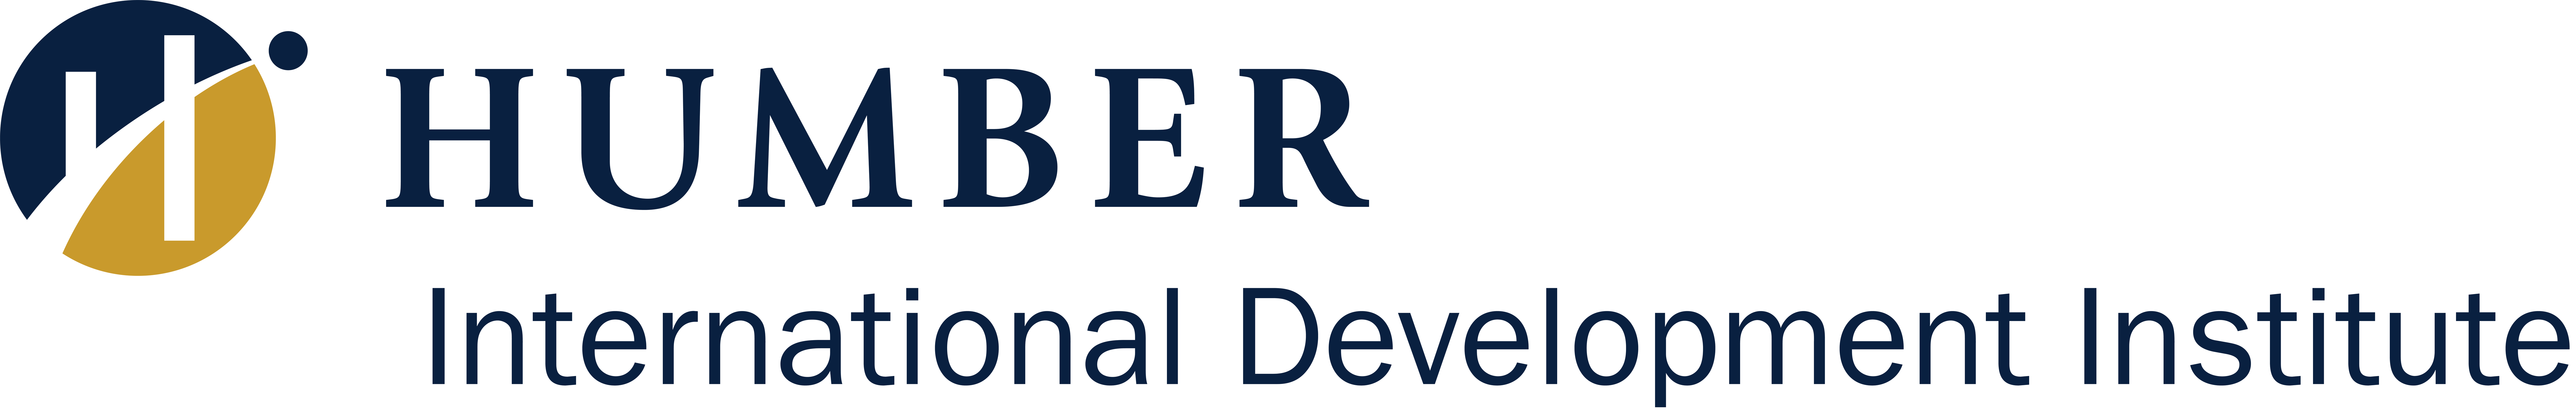 International Development Institute, Humber College - Logo